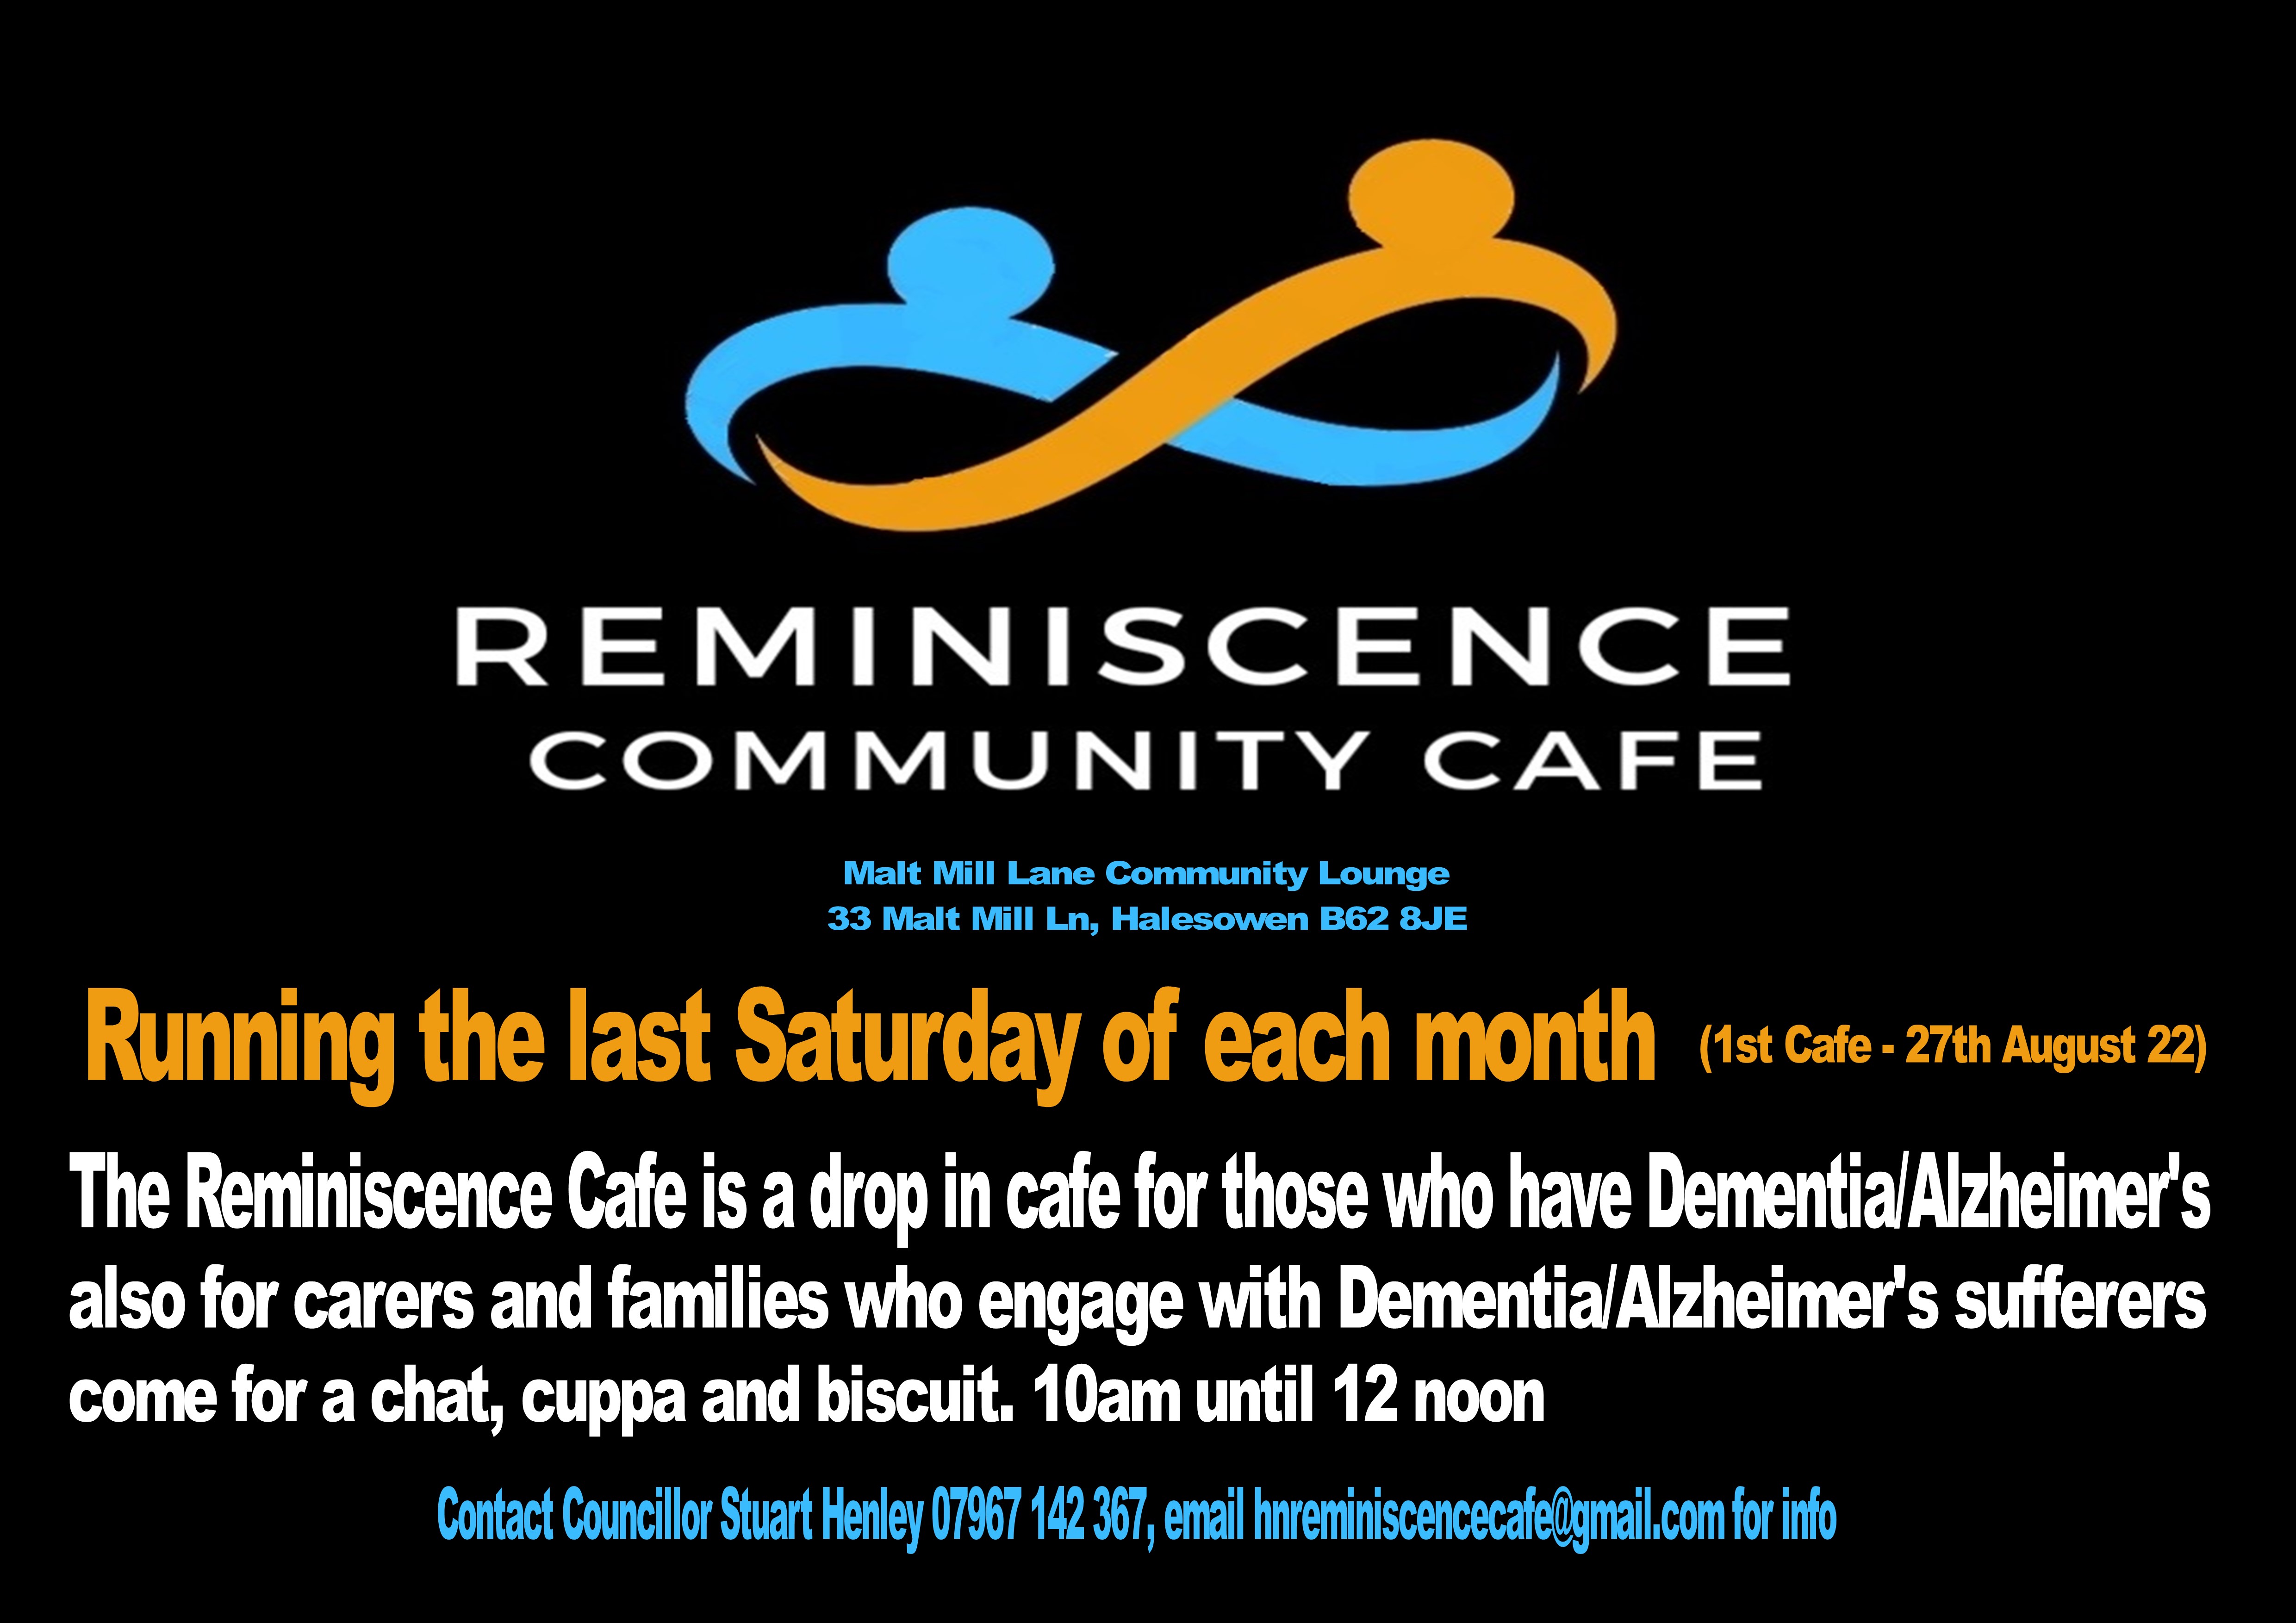 Malt Mill Lane Community Lounge - Reminiscence Cafe